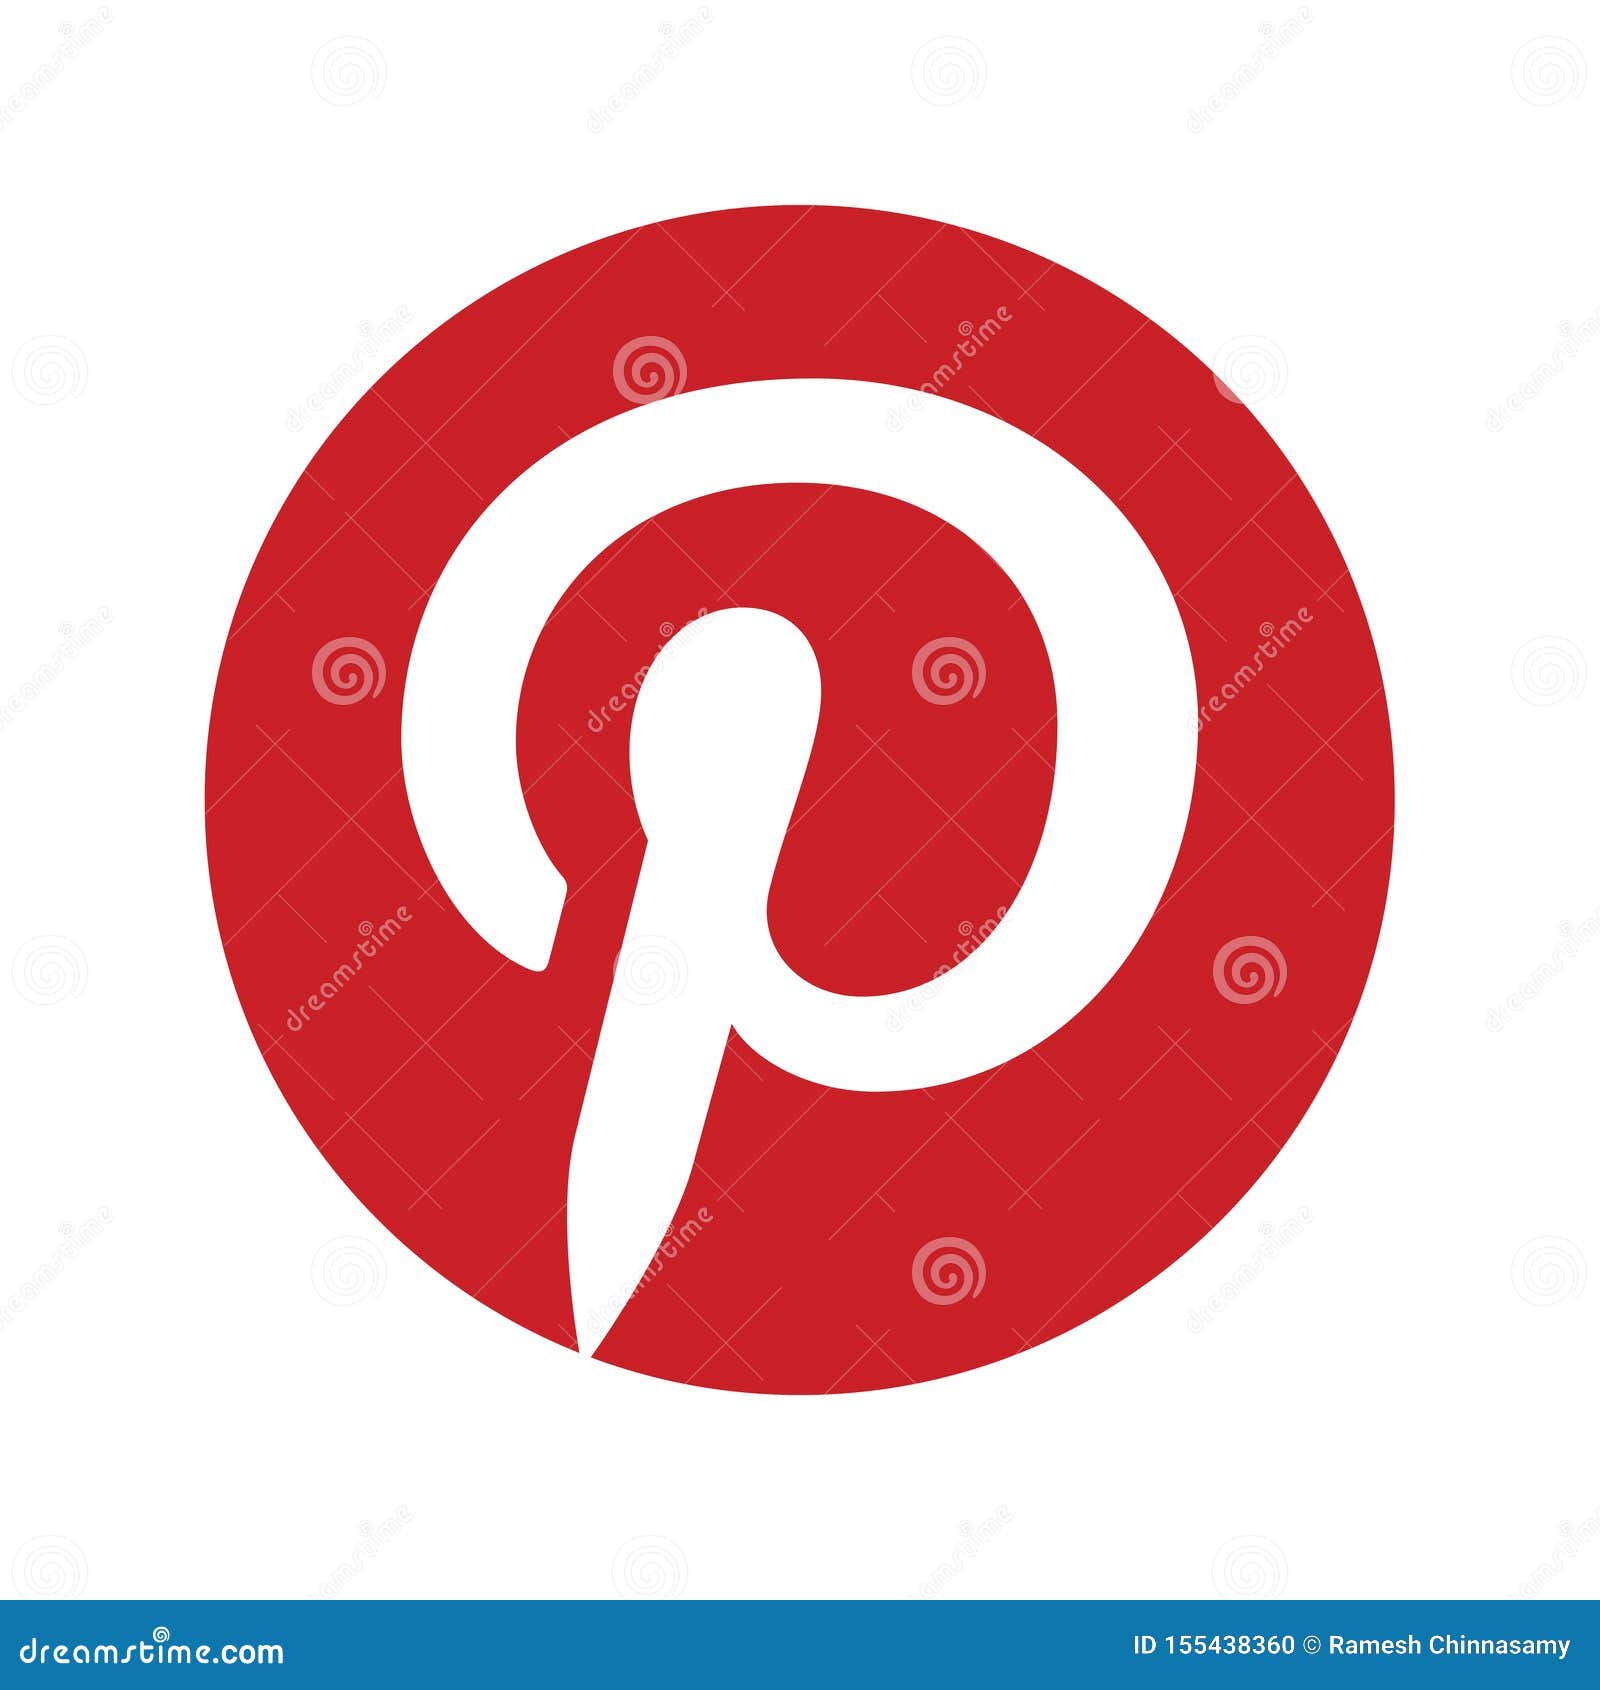 Pinterest Social Media Icon Button Editorial Image - Illustration of